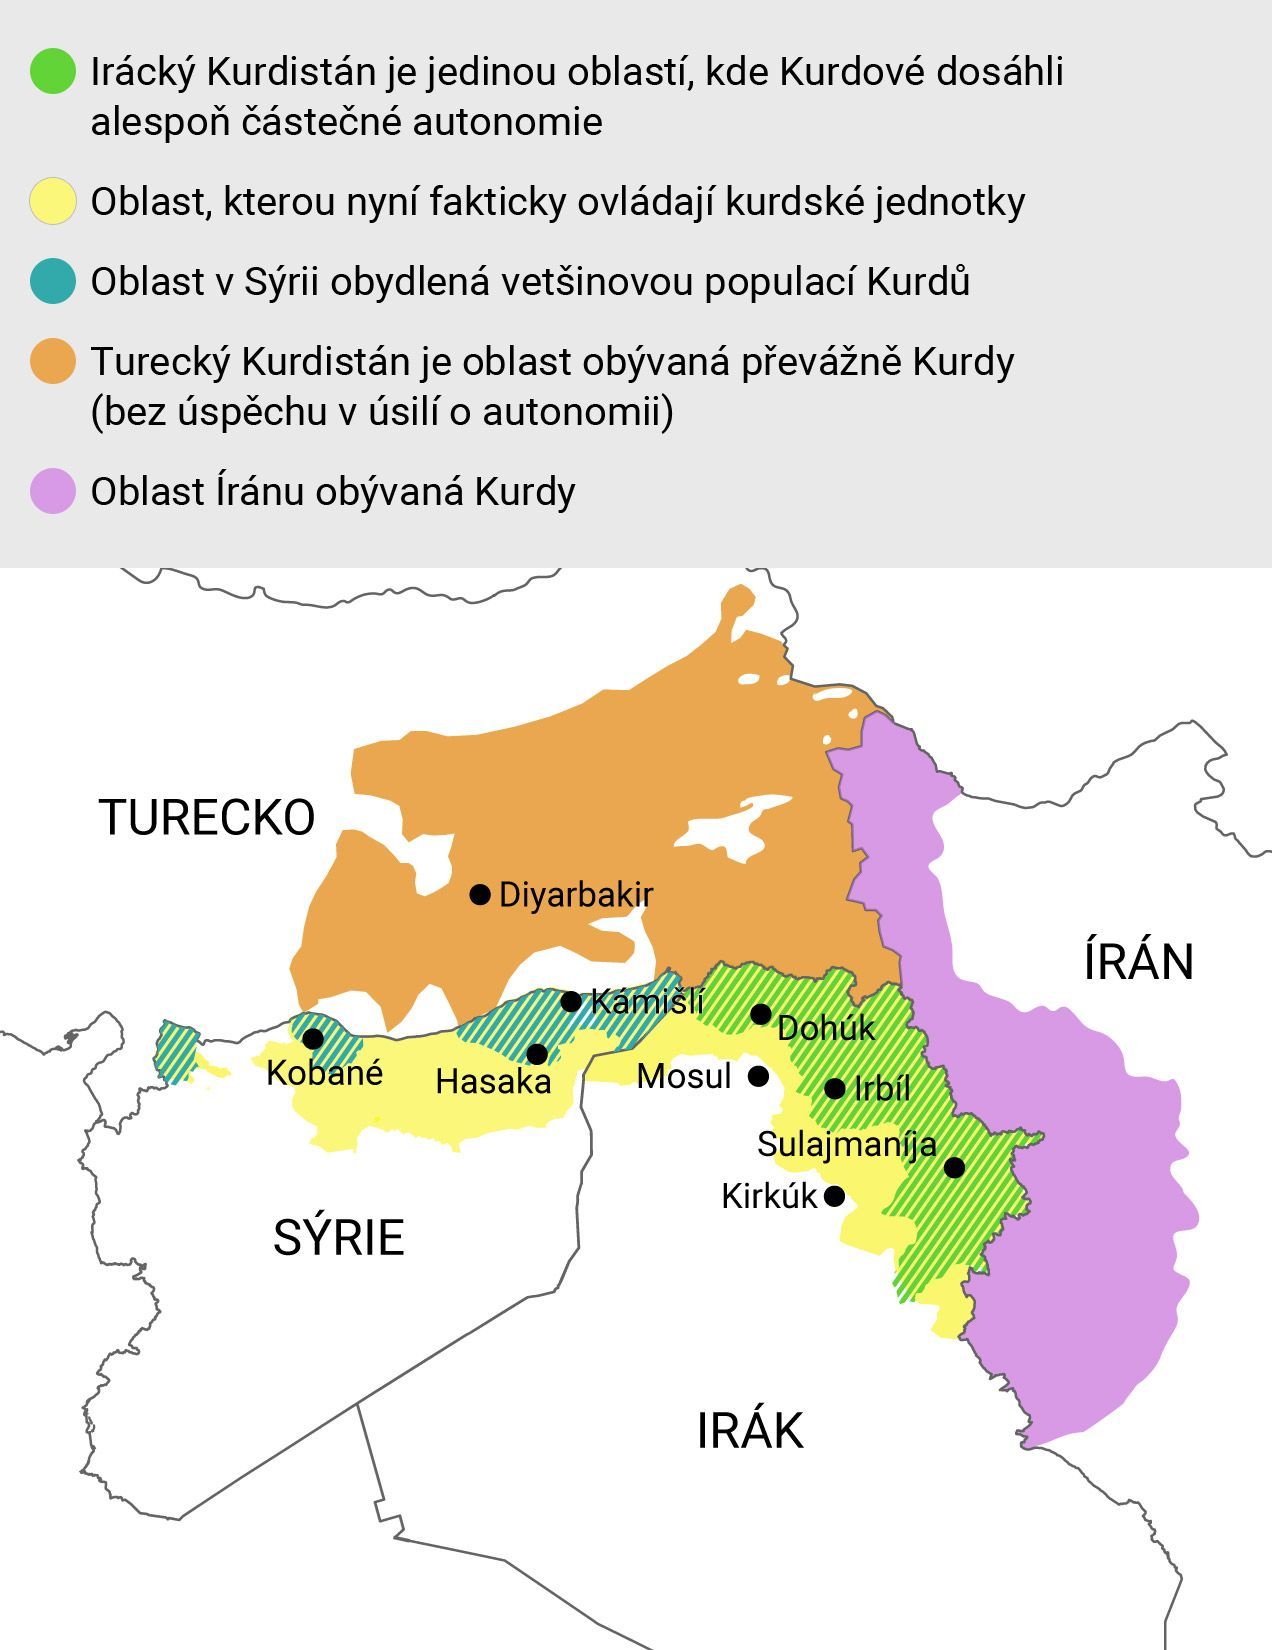 Kurdové v Turecku, Iráku a Sýrii